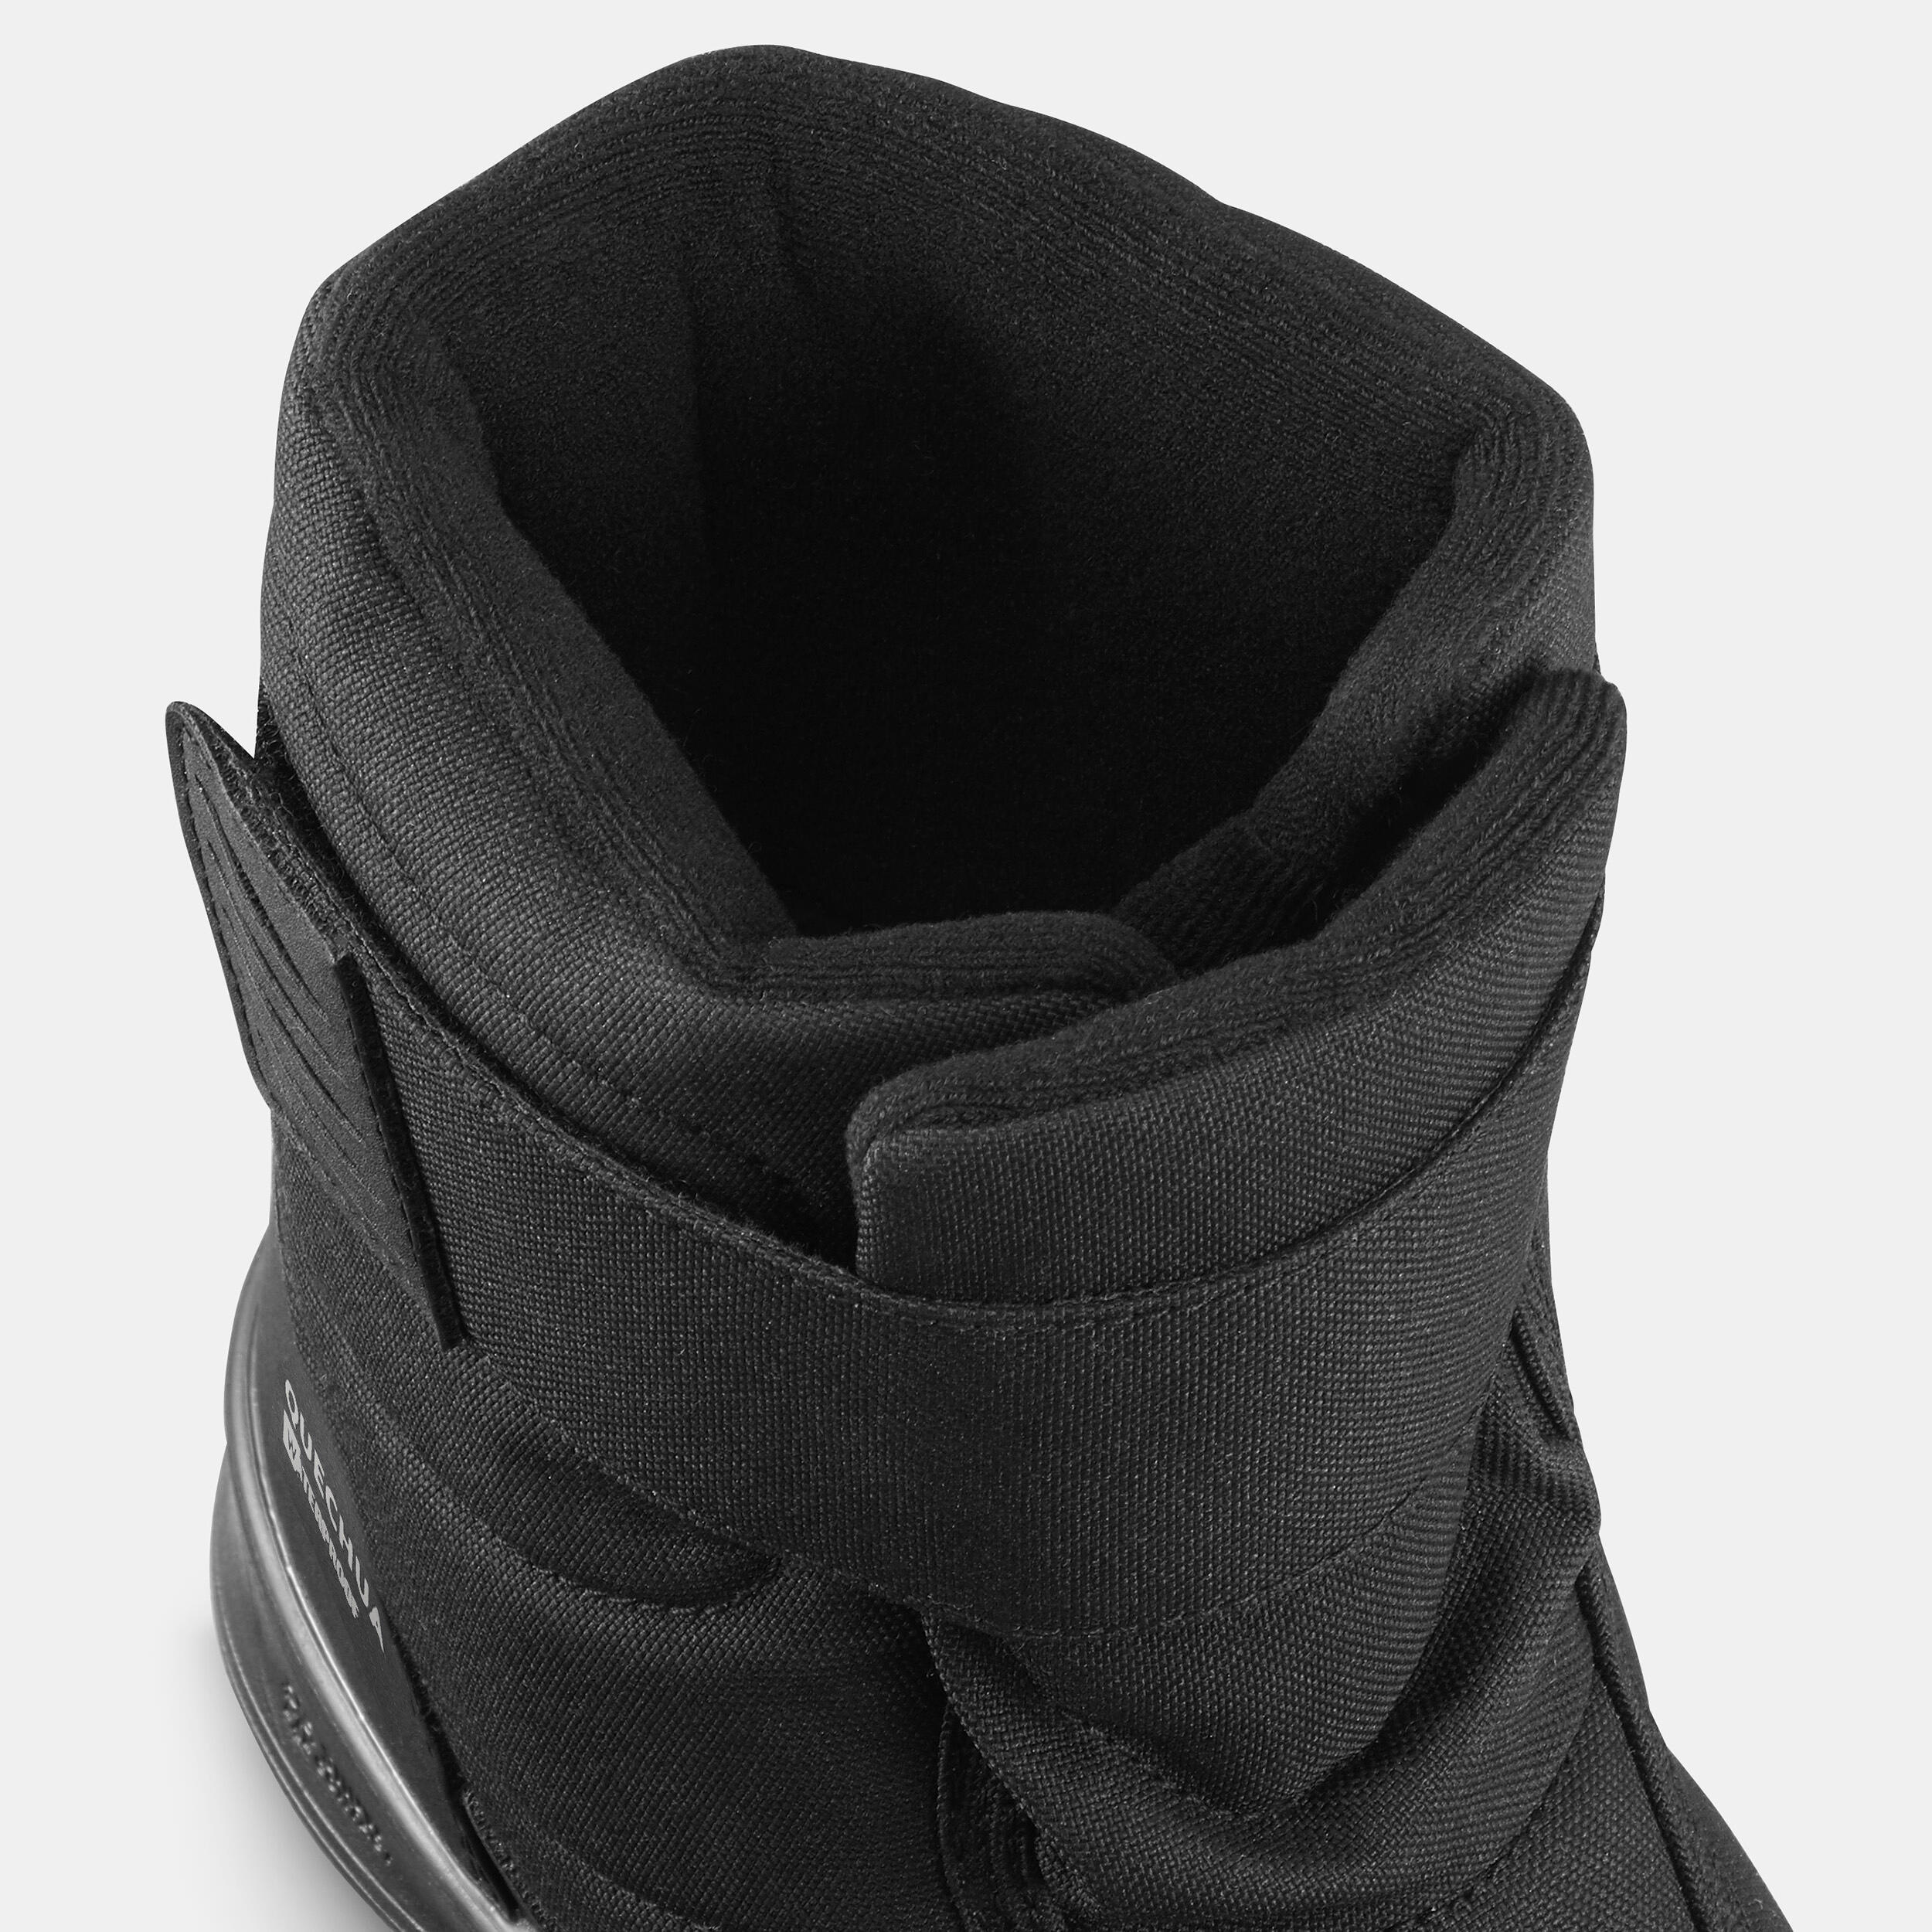 Kids’ warm waterproof snow hiking boots SH100 - Velcro Size 7 - 5.5  6/7